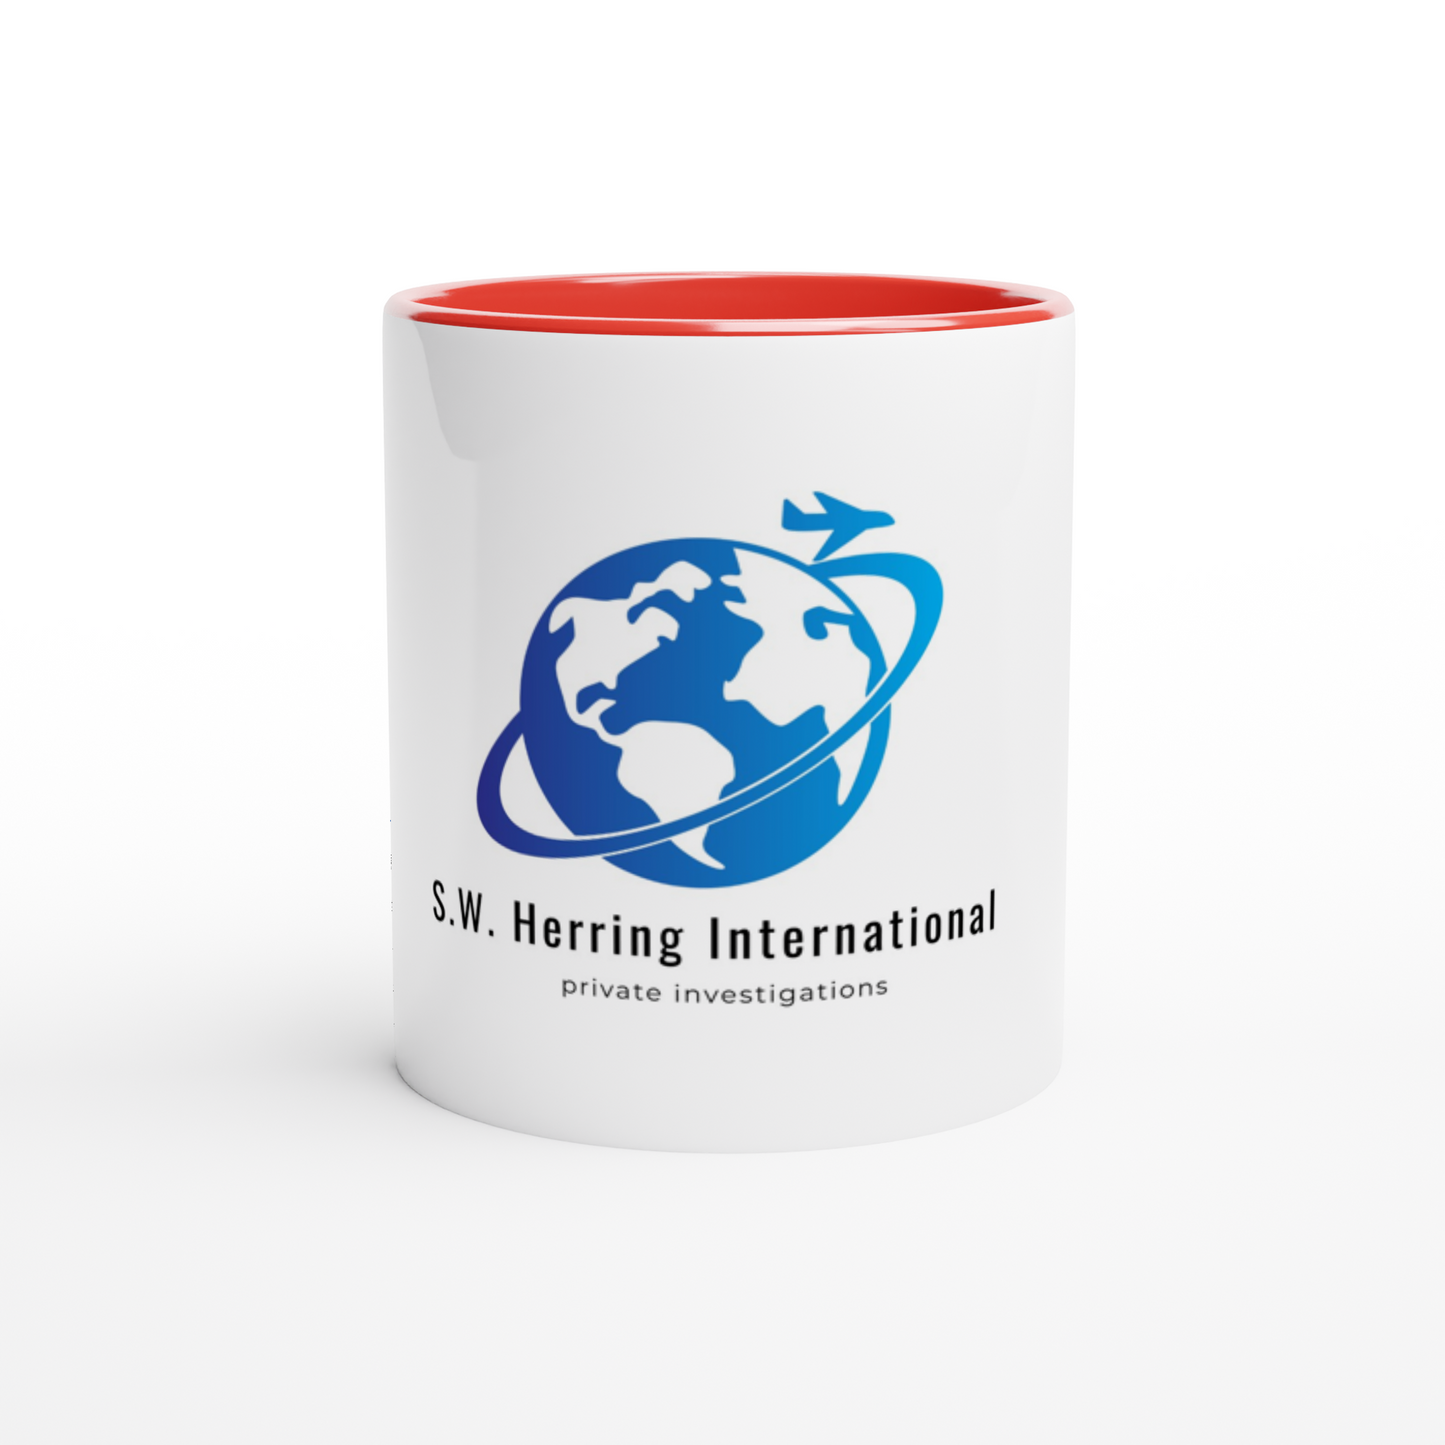 White 11oz Ceramic Mug with Color Inside - S.W. Herring International